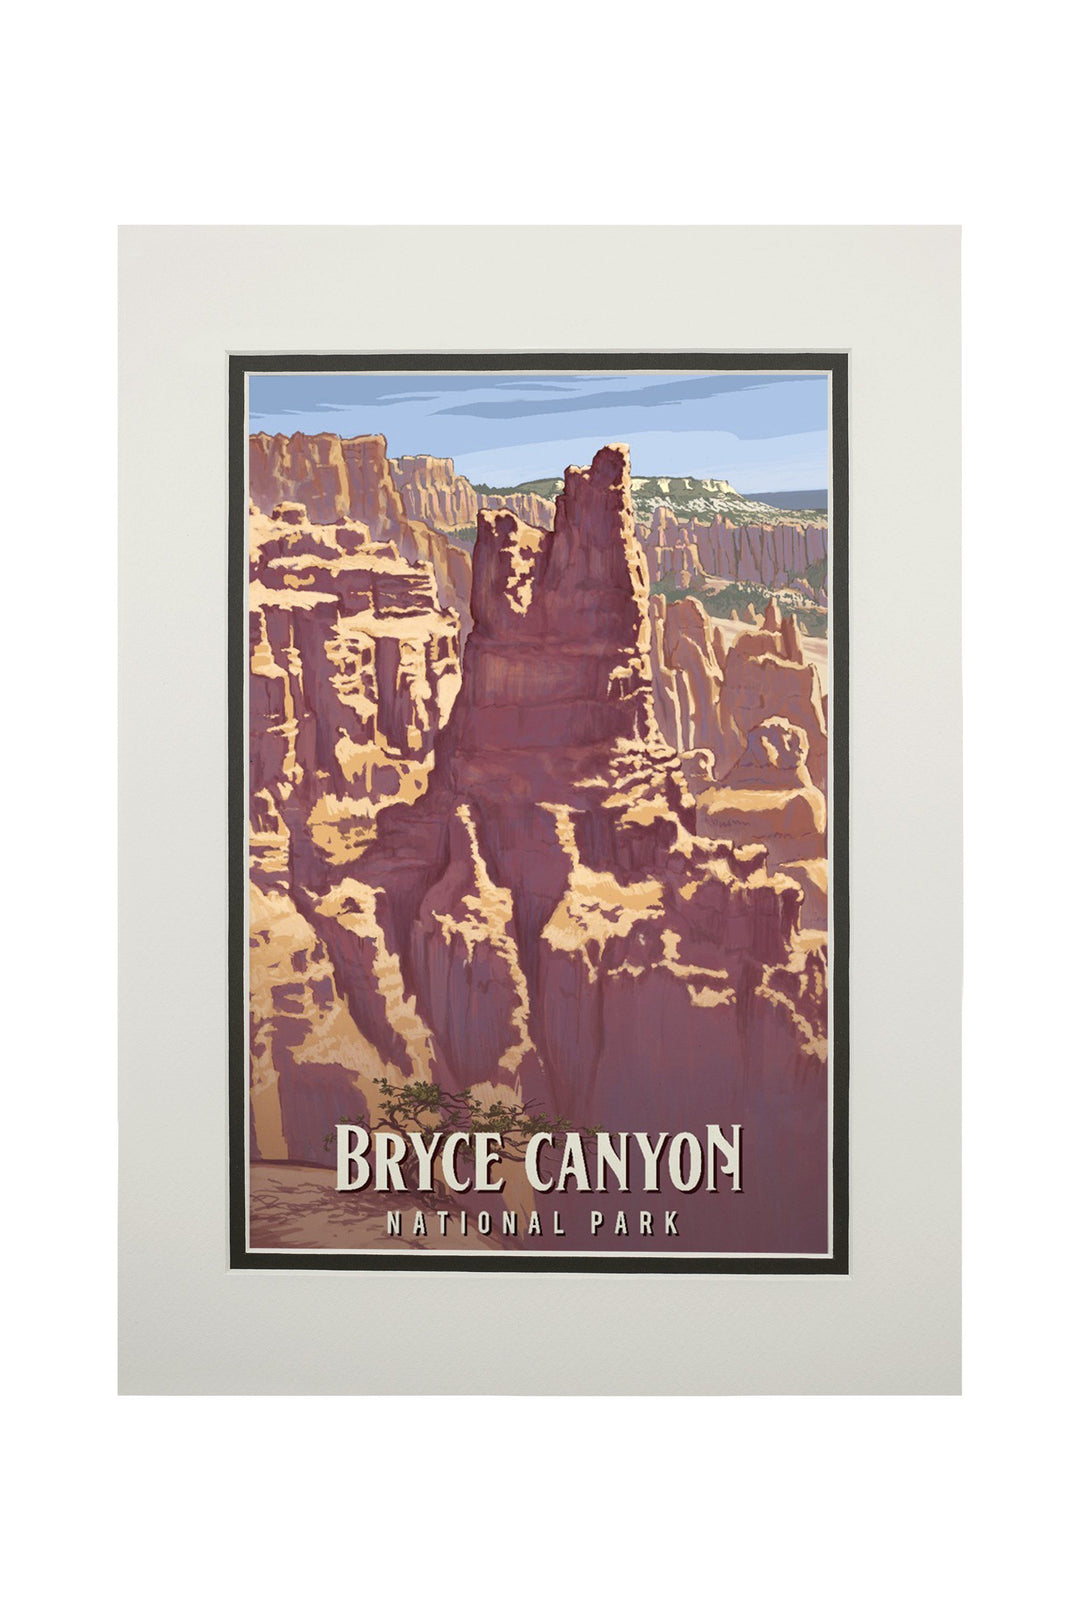 Bryce Canyon National Park, Utah, Painterly National Park Series, Art Prints and Metal Signs Art Lantern Press 11 x 14 Matted Art Print 